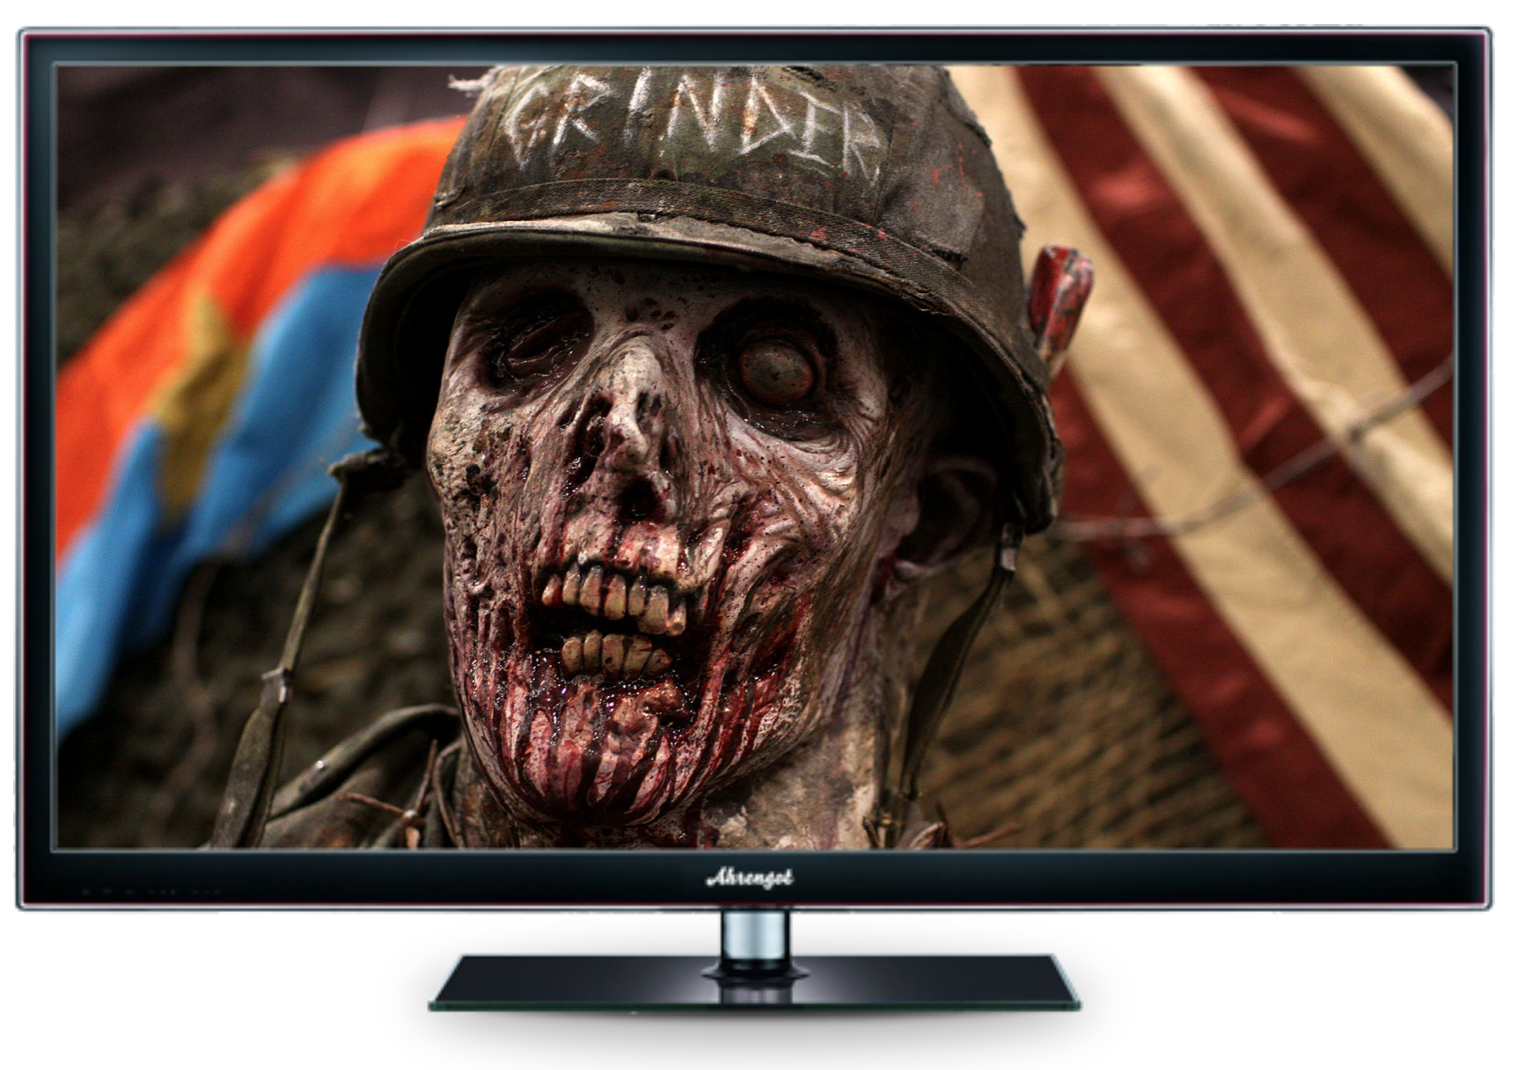 Tu tele es un zombie